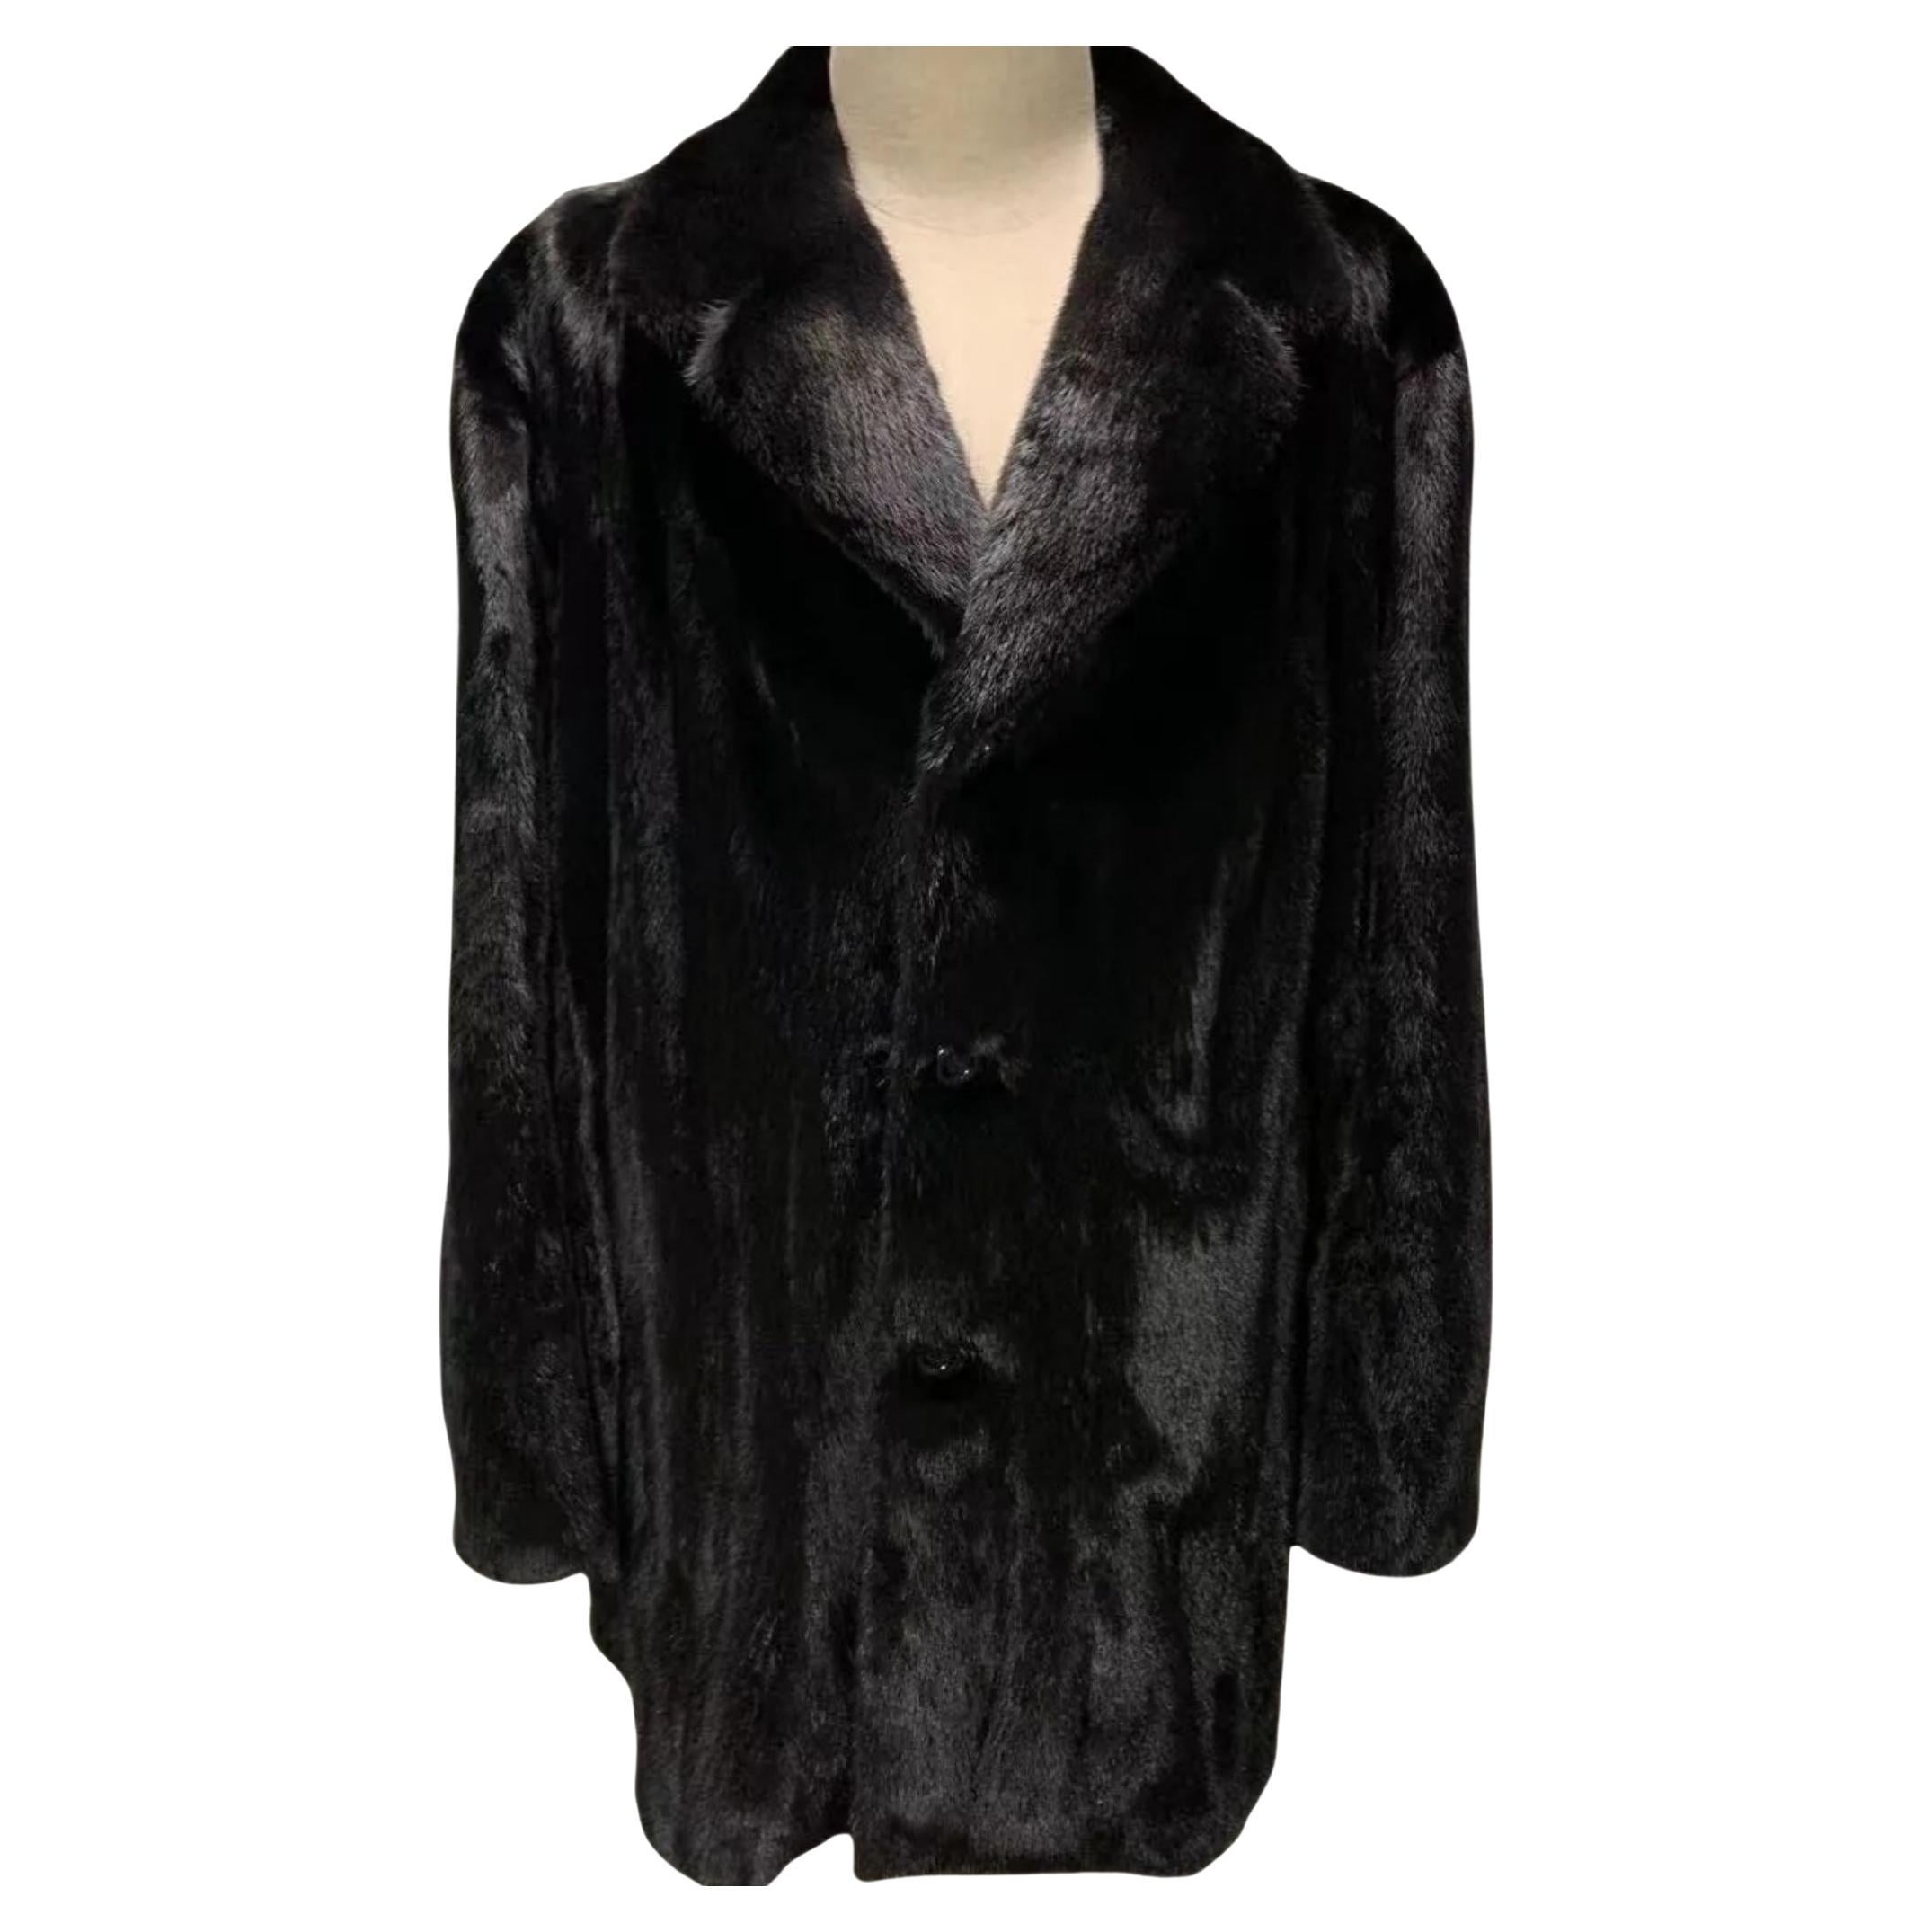 Brand new Big Tall Blackglama Men's mink fur coat parka jacket size 2 XL For Sale